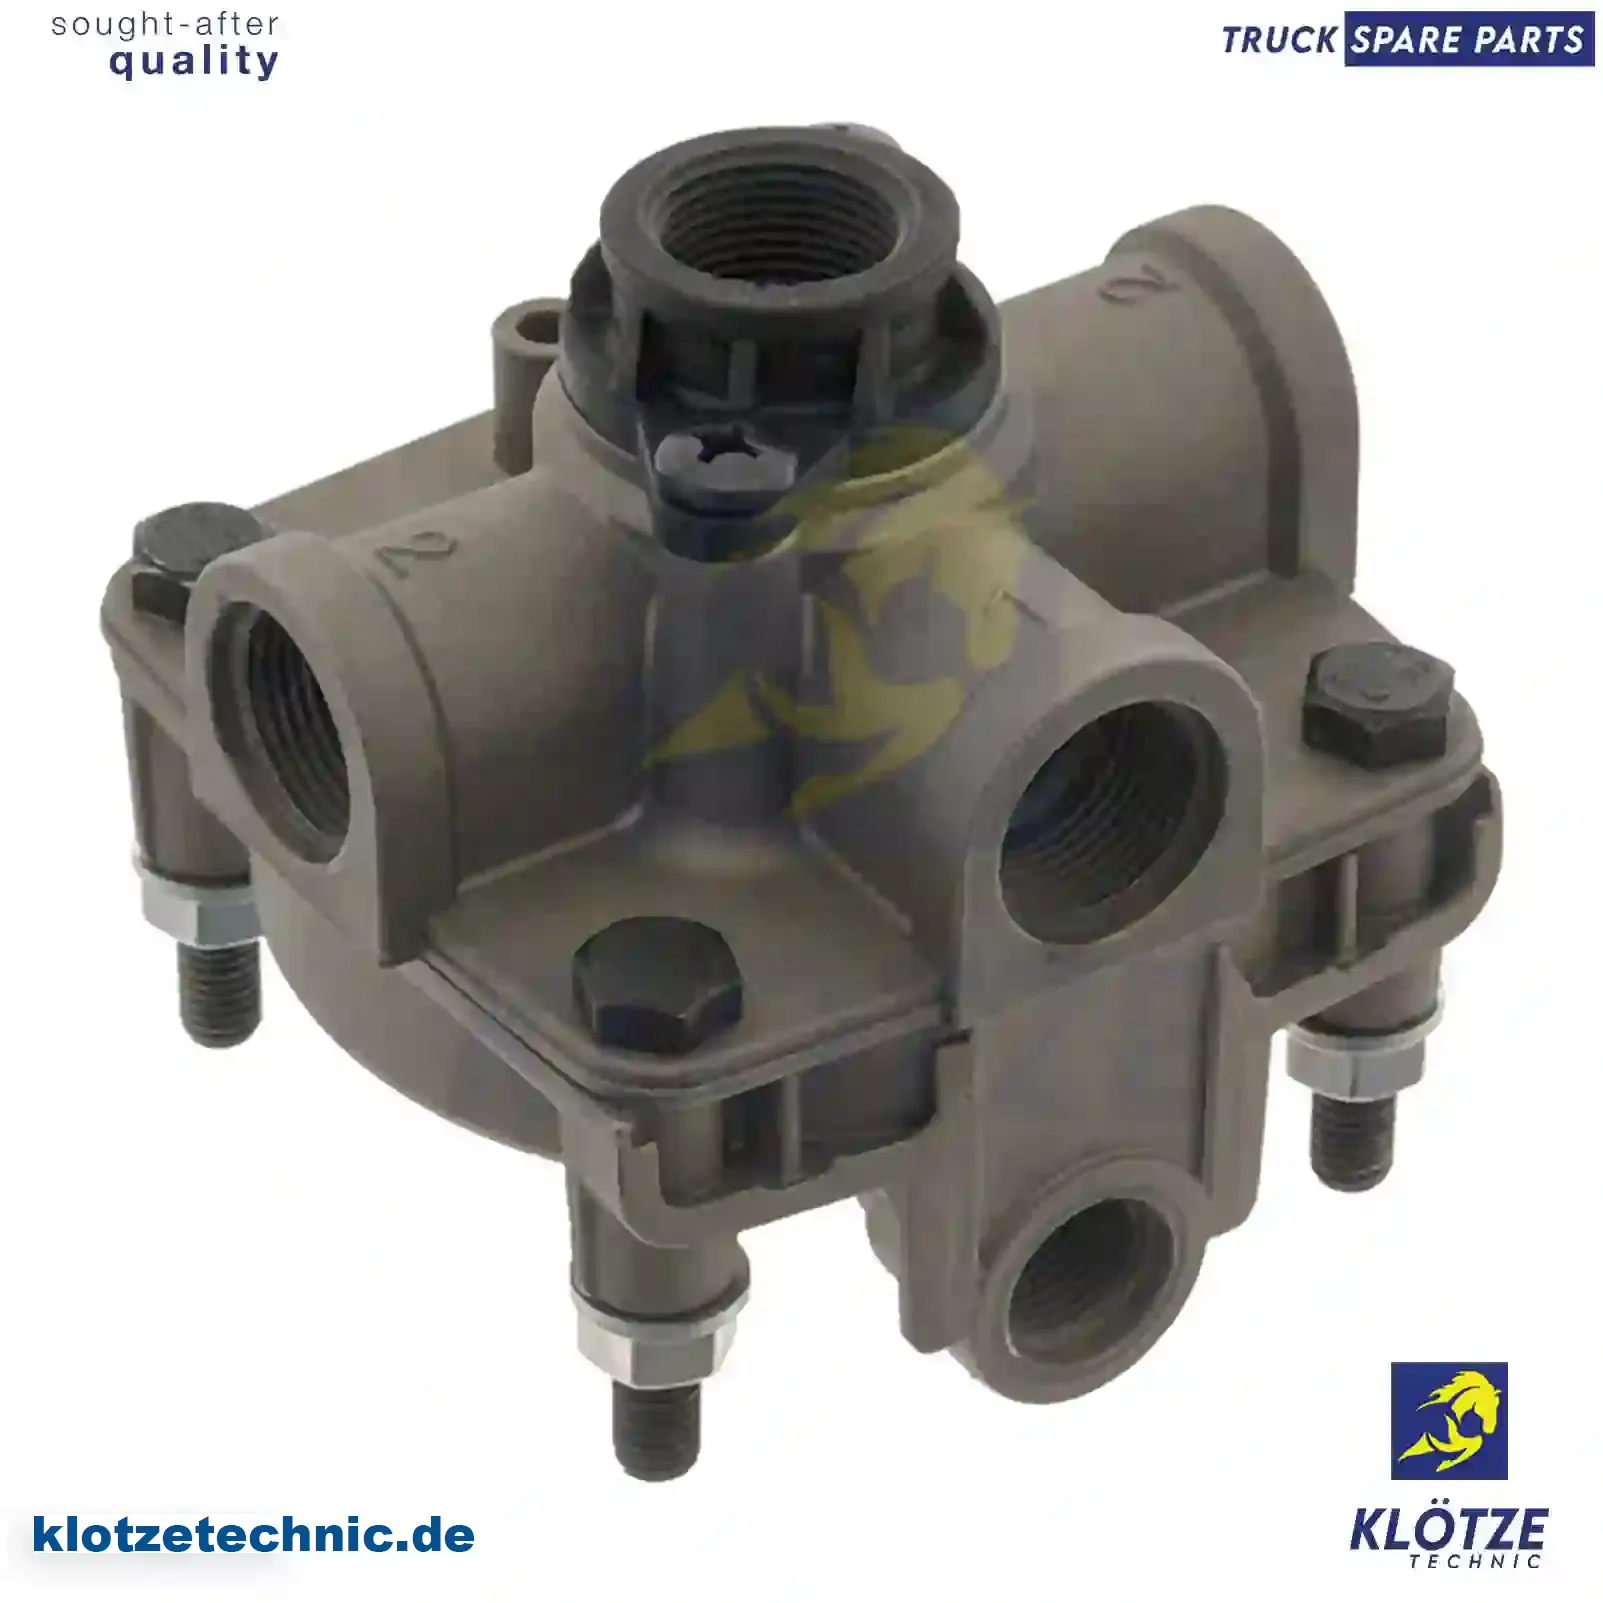 Relay valve, 1411244, ZG50602-0008,